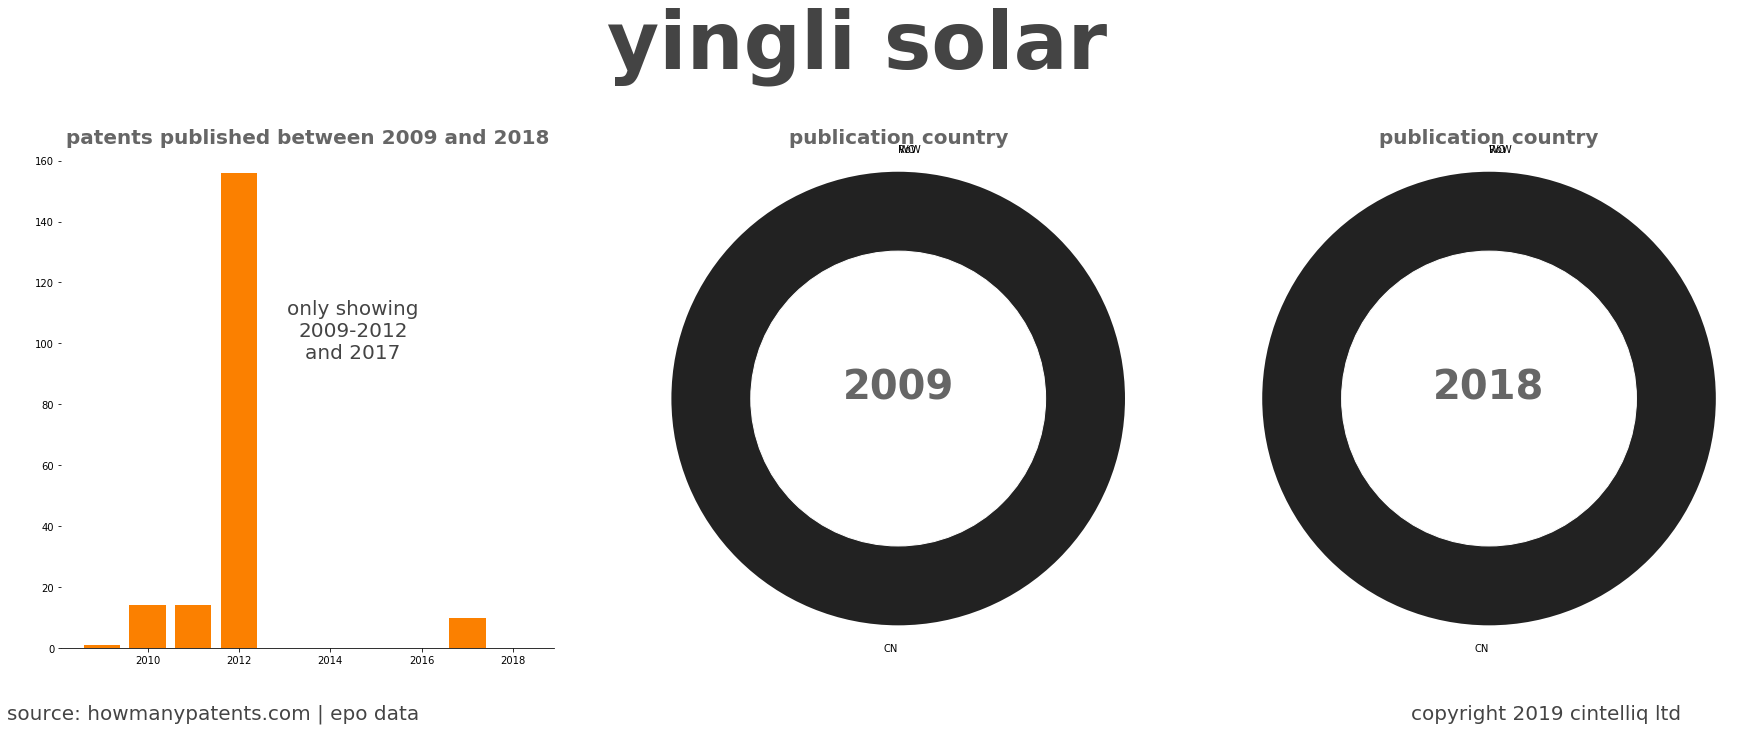 summary of patents for Yingli Solar 